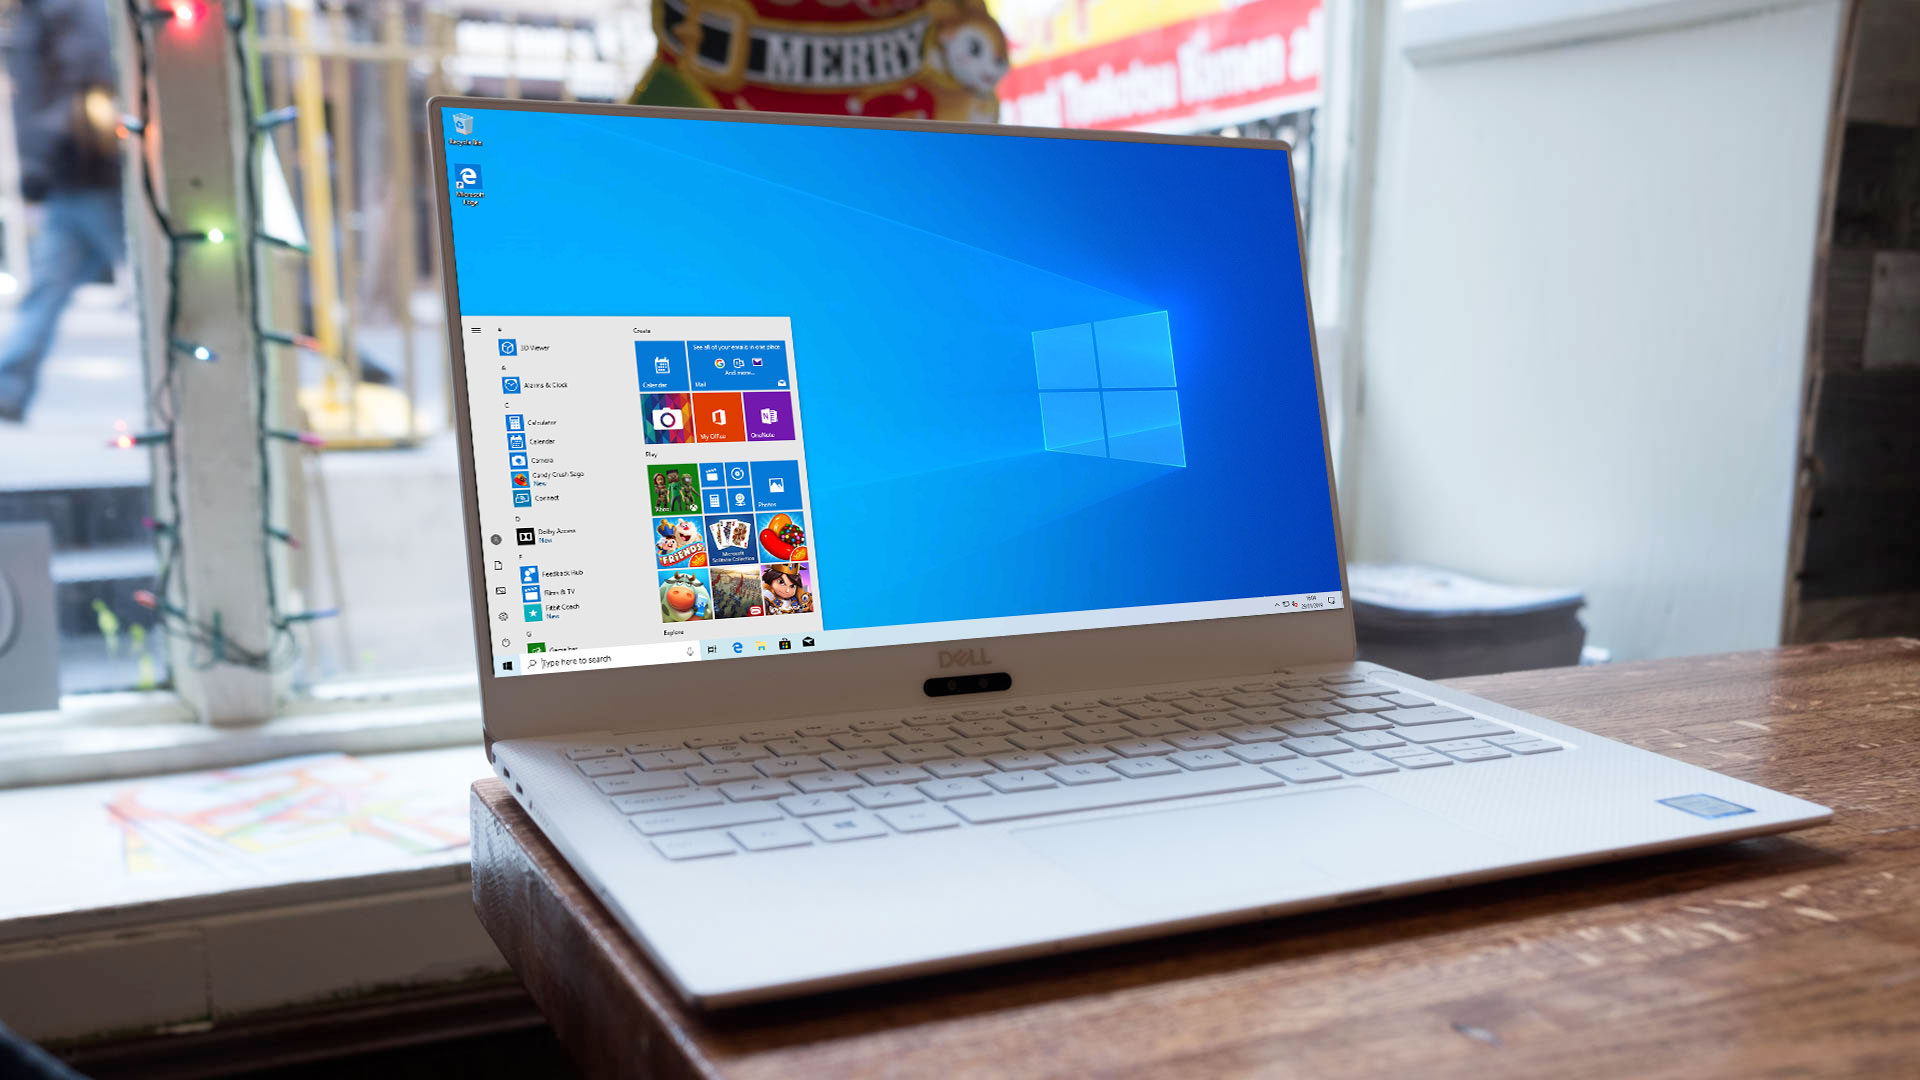 Laptop running Windows 10 May 2019 Update